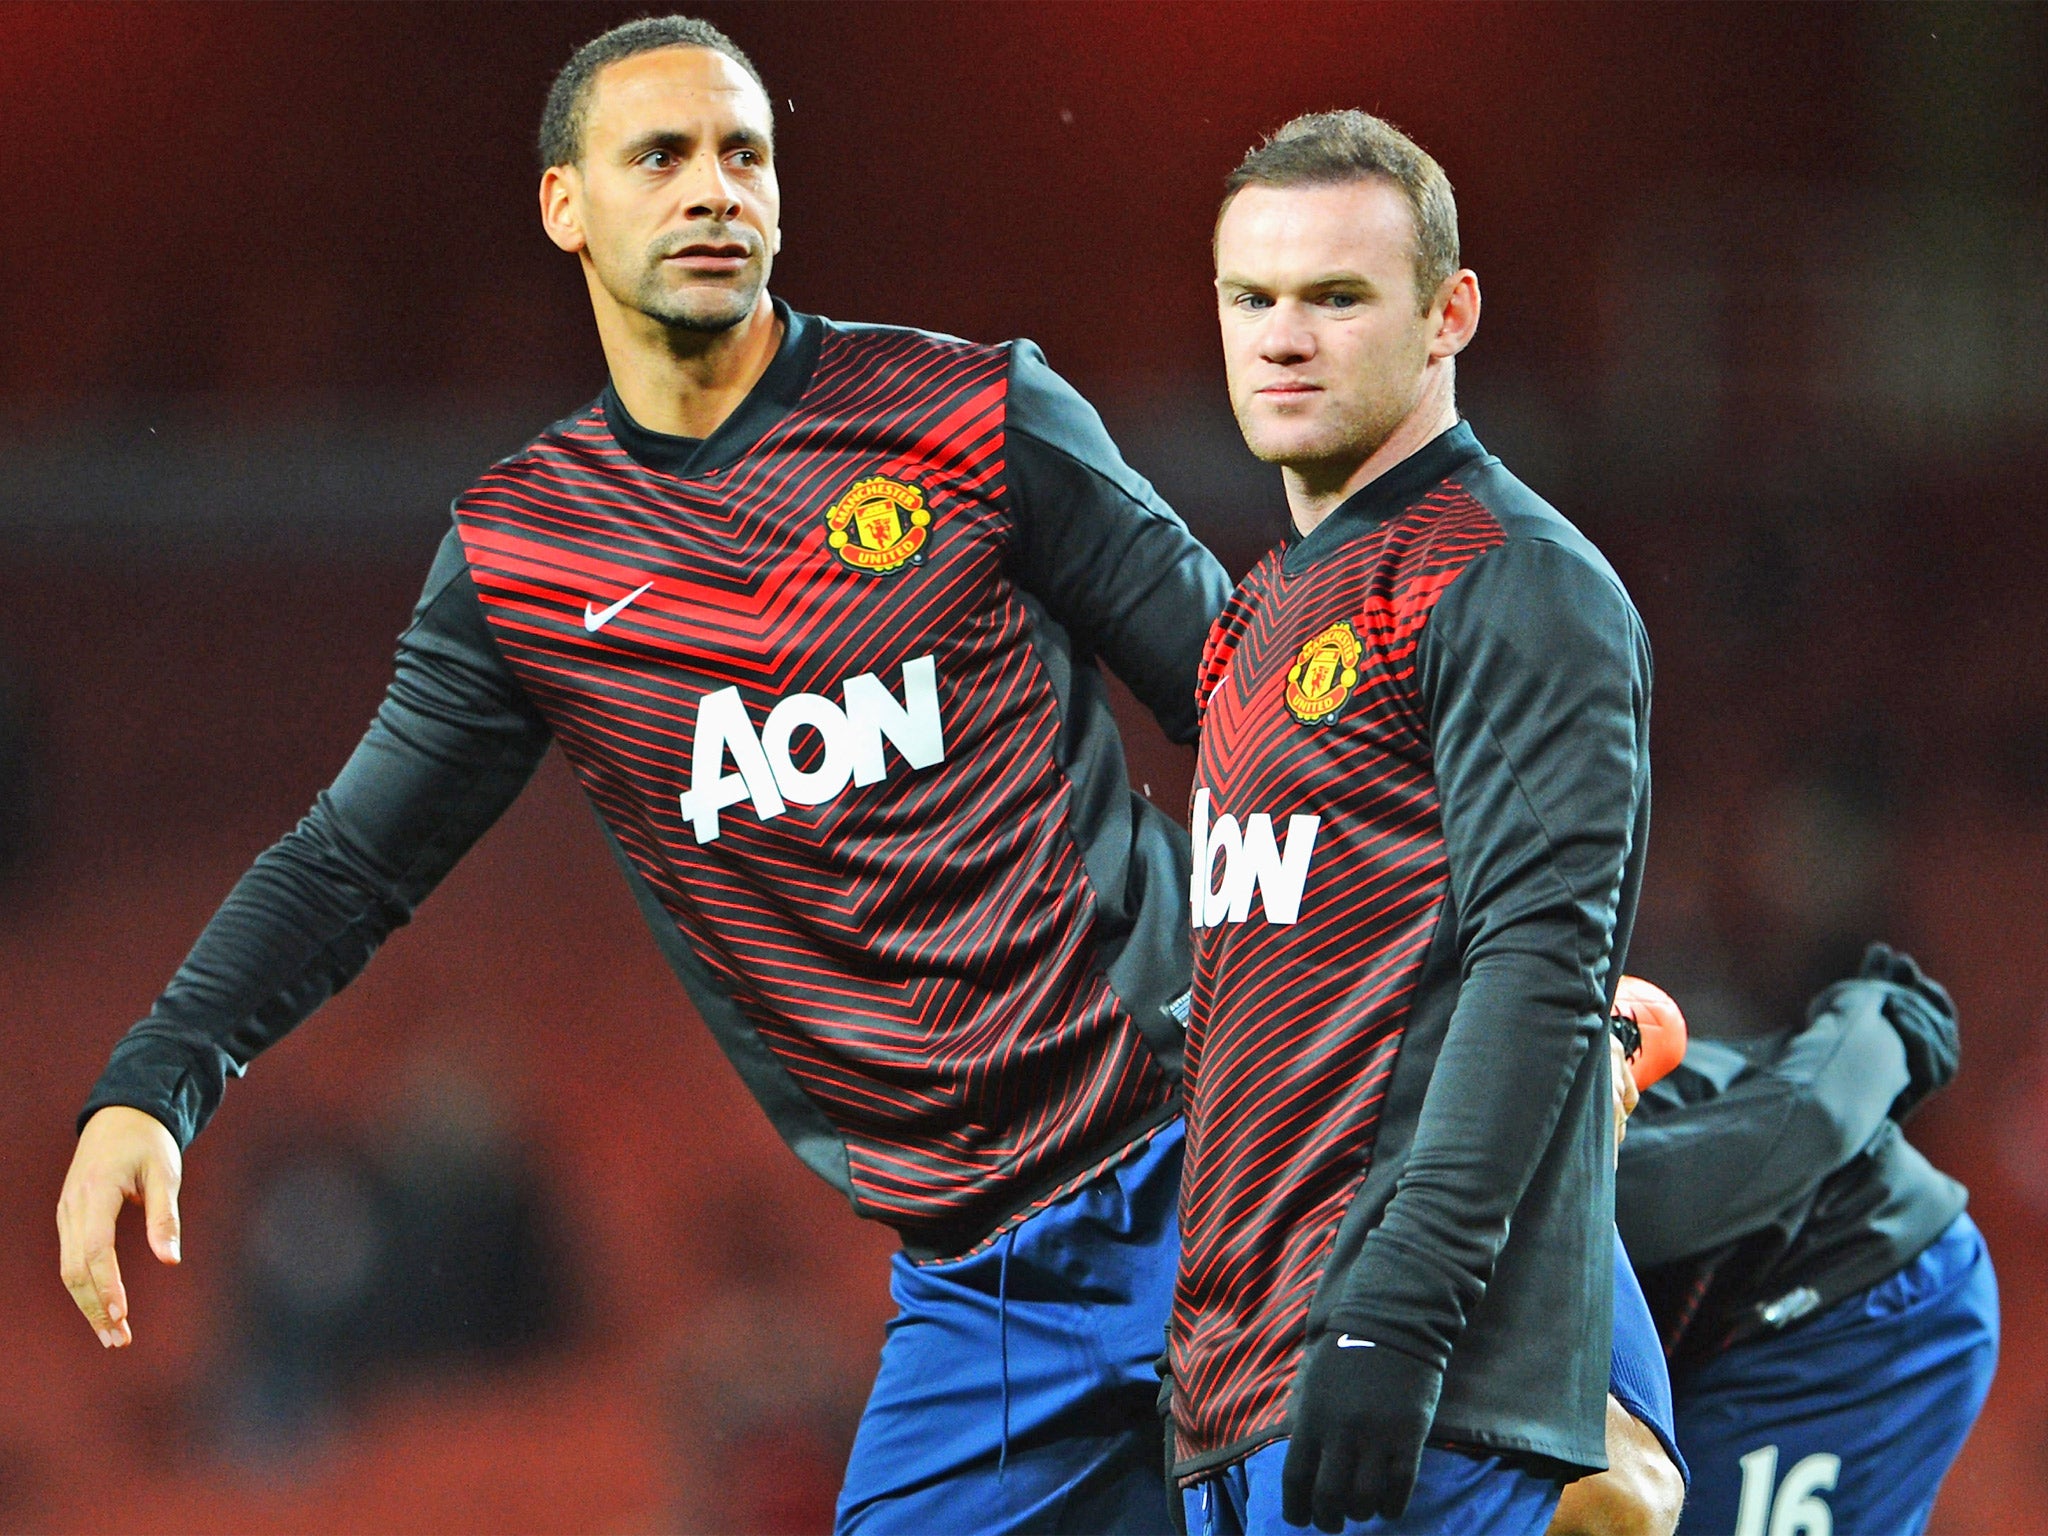 Rio Ferdinand and Wayne Rooney were teammates at Manchester United